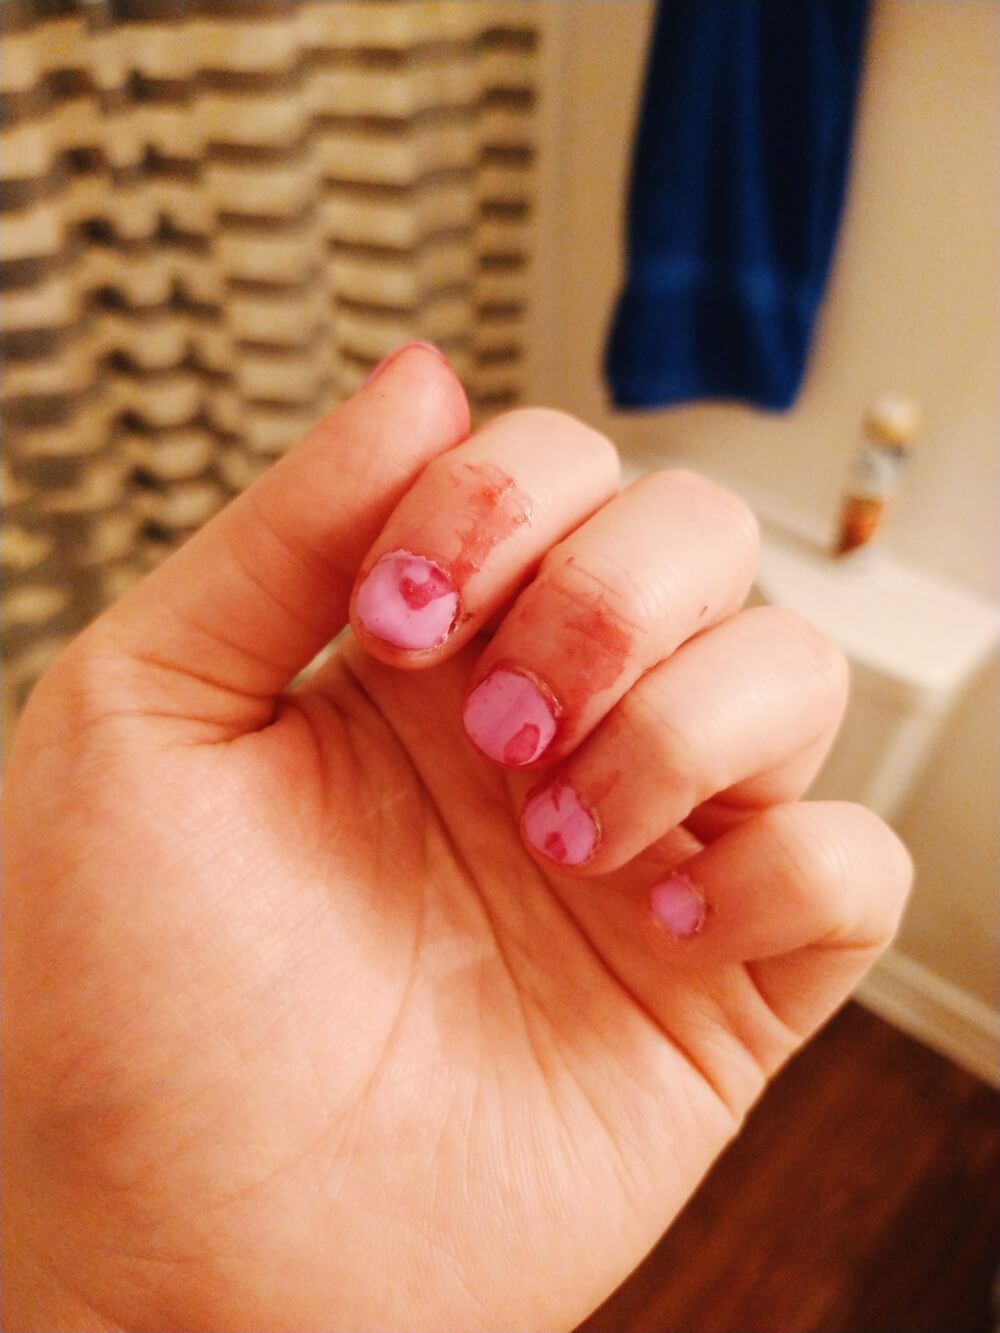 Blood orange on lavender nail-polished fingers on bathroom background to look like menstrual fluid